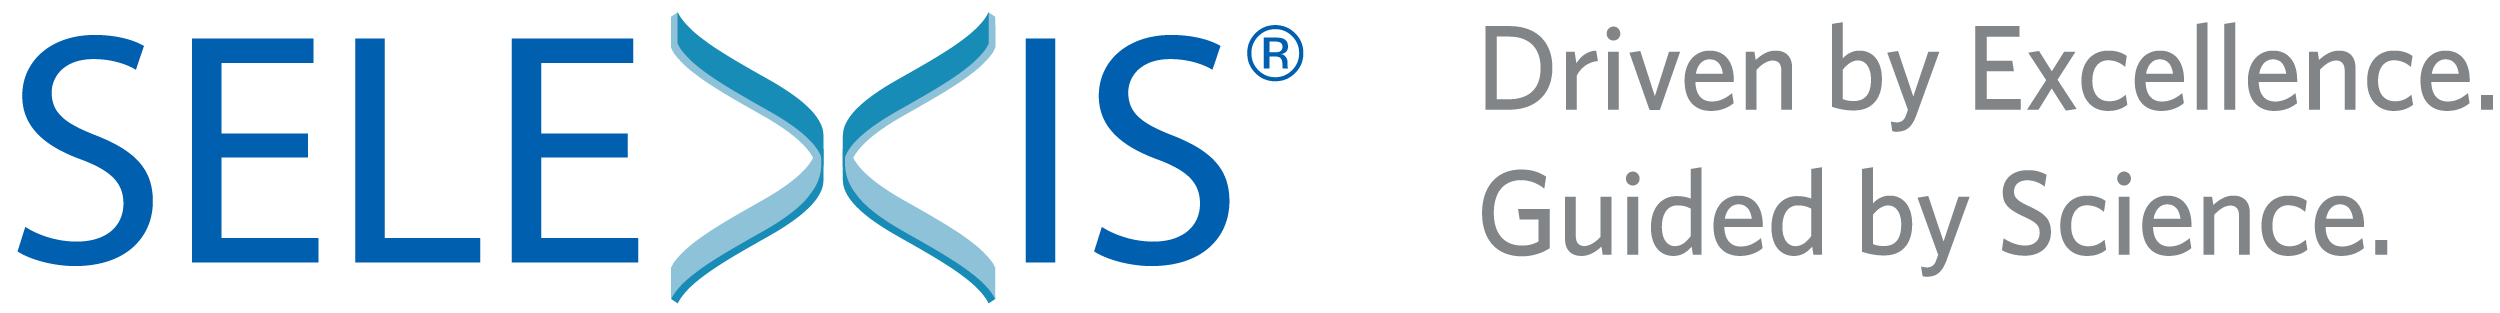 SELEXIS-logo-with-tagline-2016MAR19-V600-Full-Color